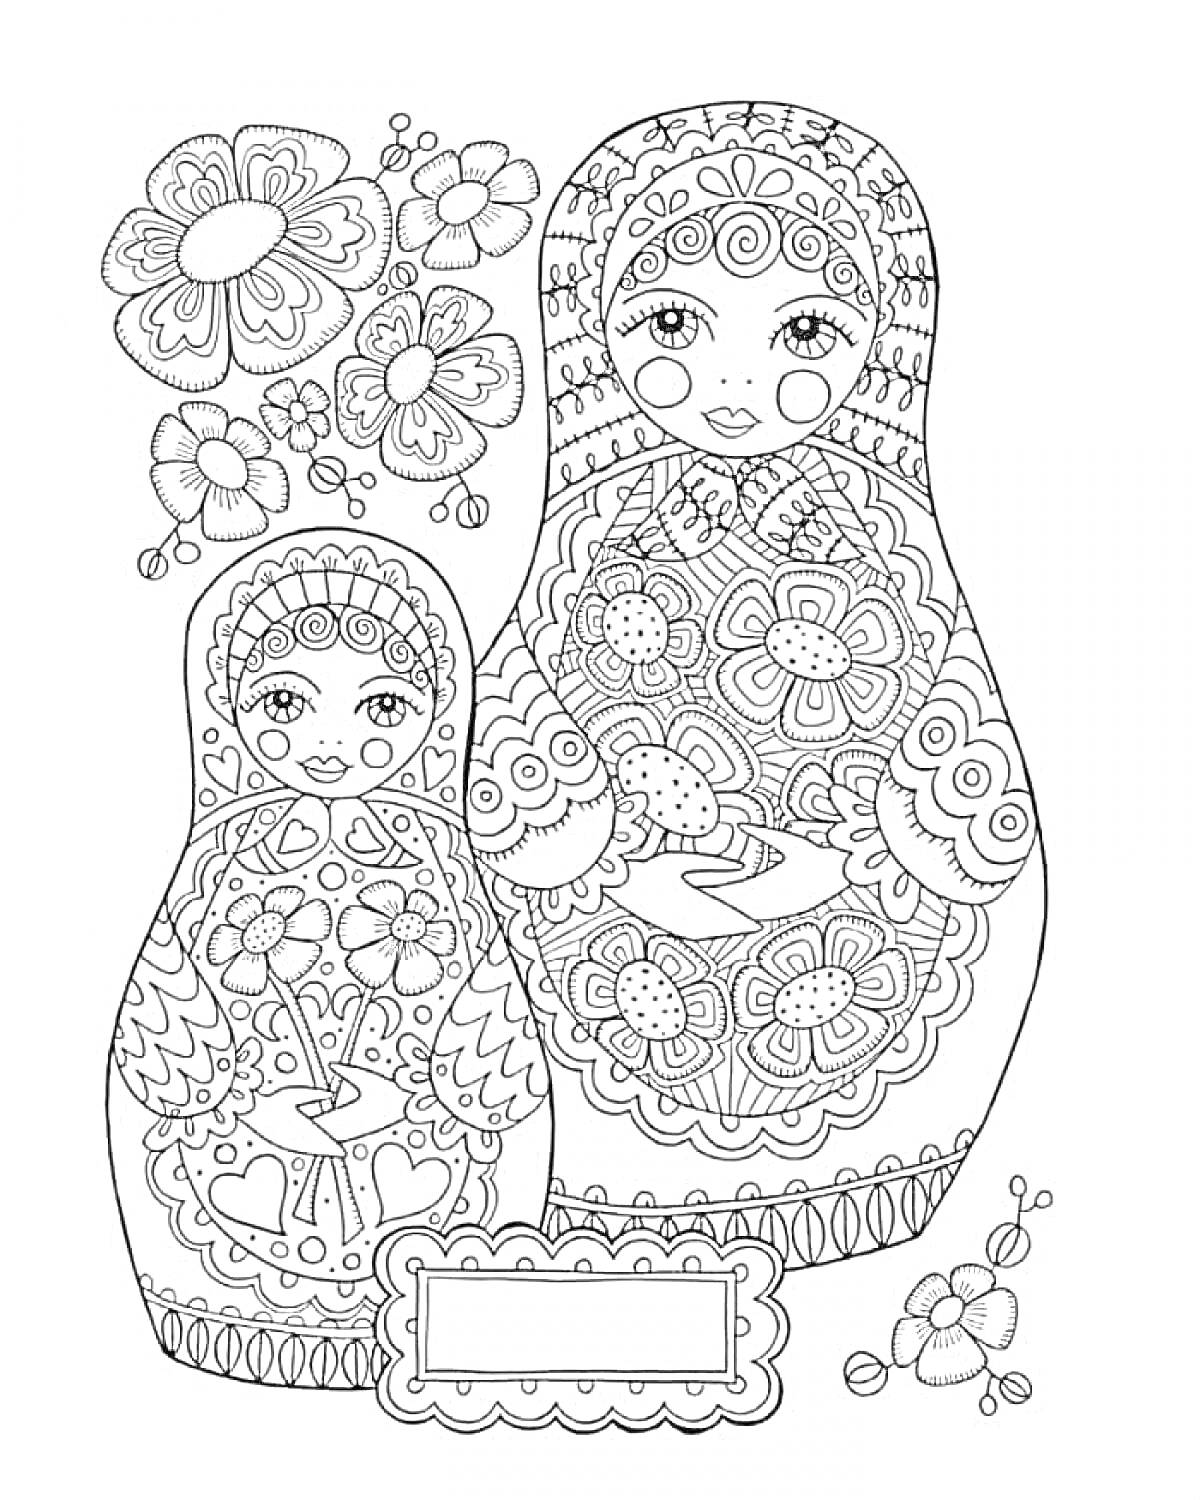 Раскраска Матрешка с цветами и узорами, две куклы, пустая рамка